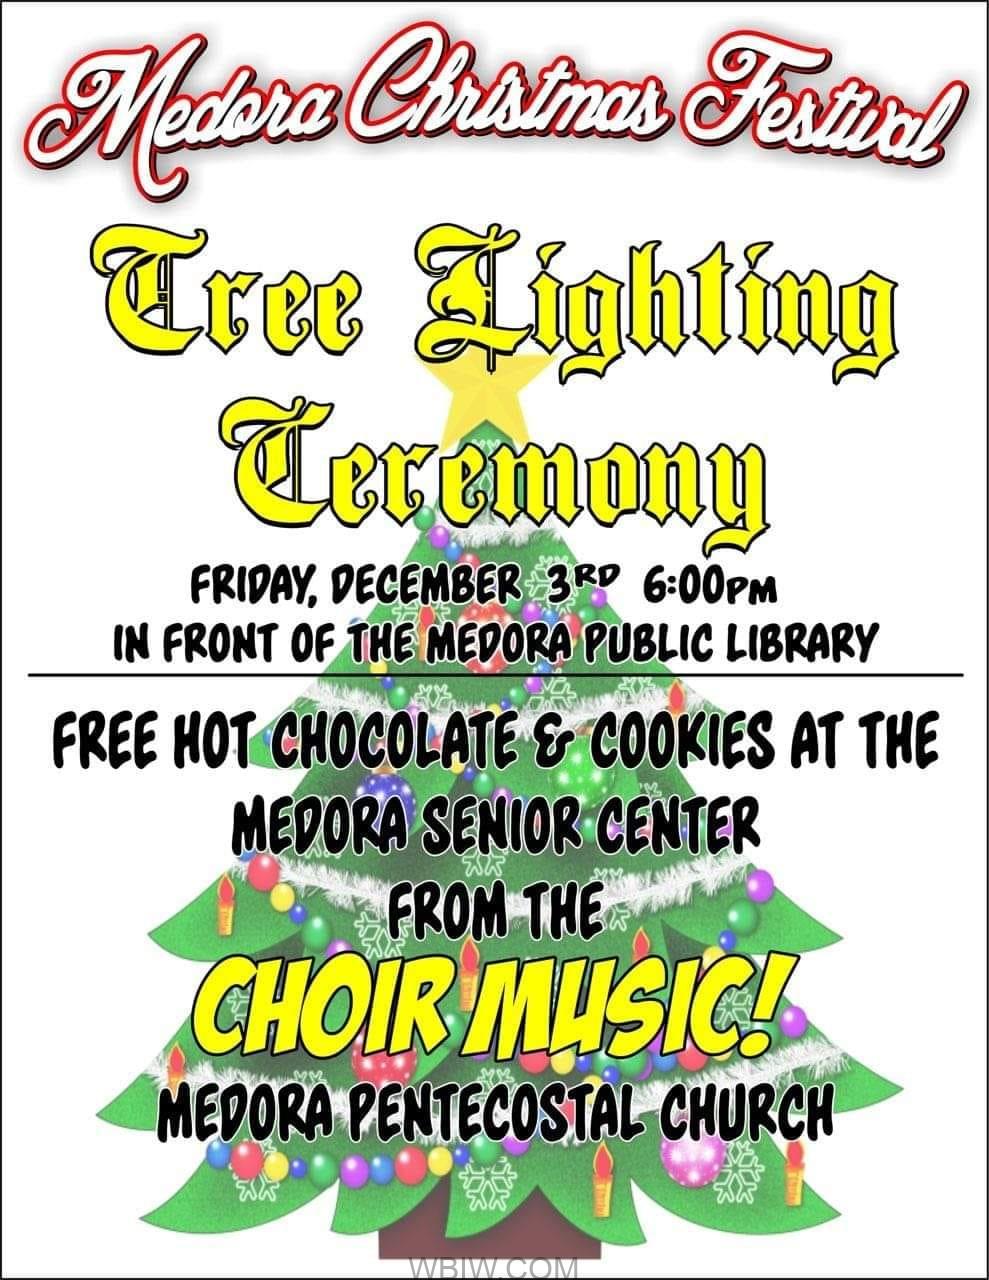 Medora Christmas Festival kicks off with a treelighting ceremony on